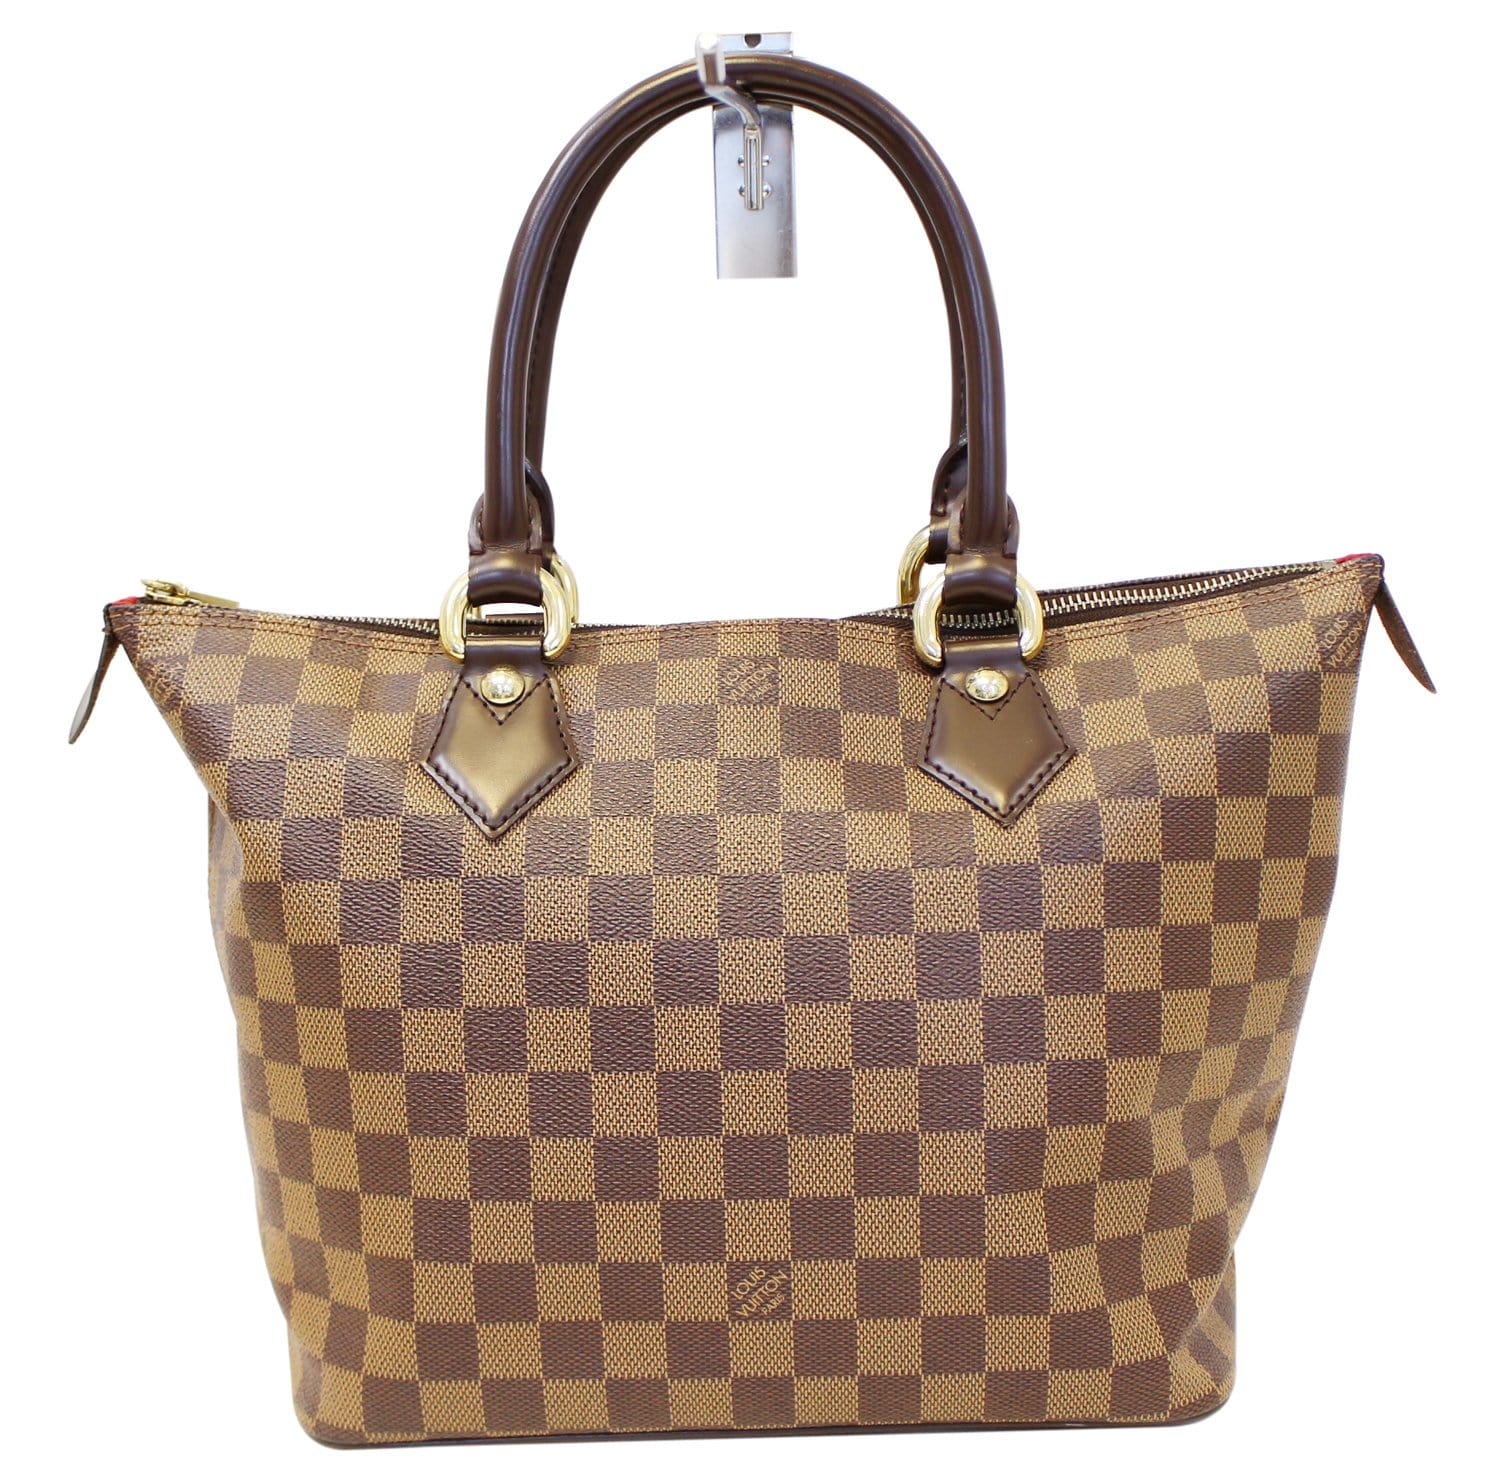 Louis Vuitton Saleya PM Damier Azur Tote Hand Bag branded